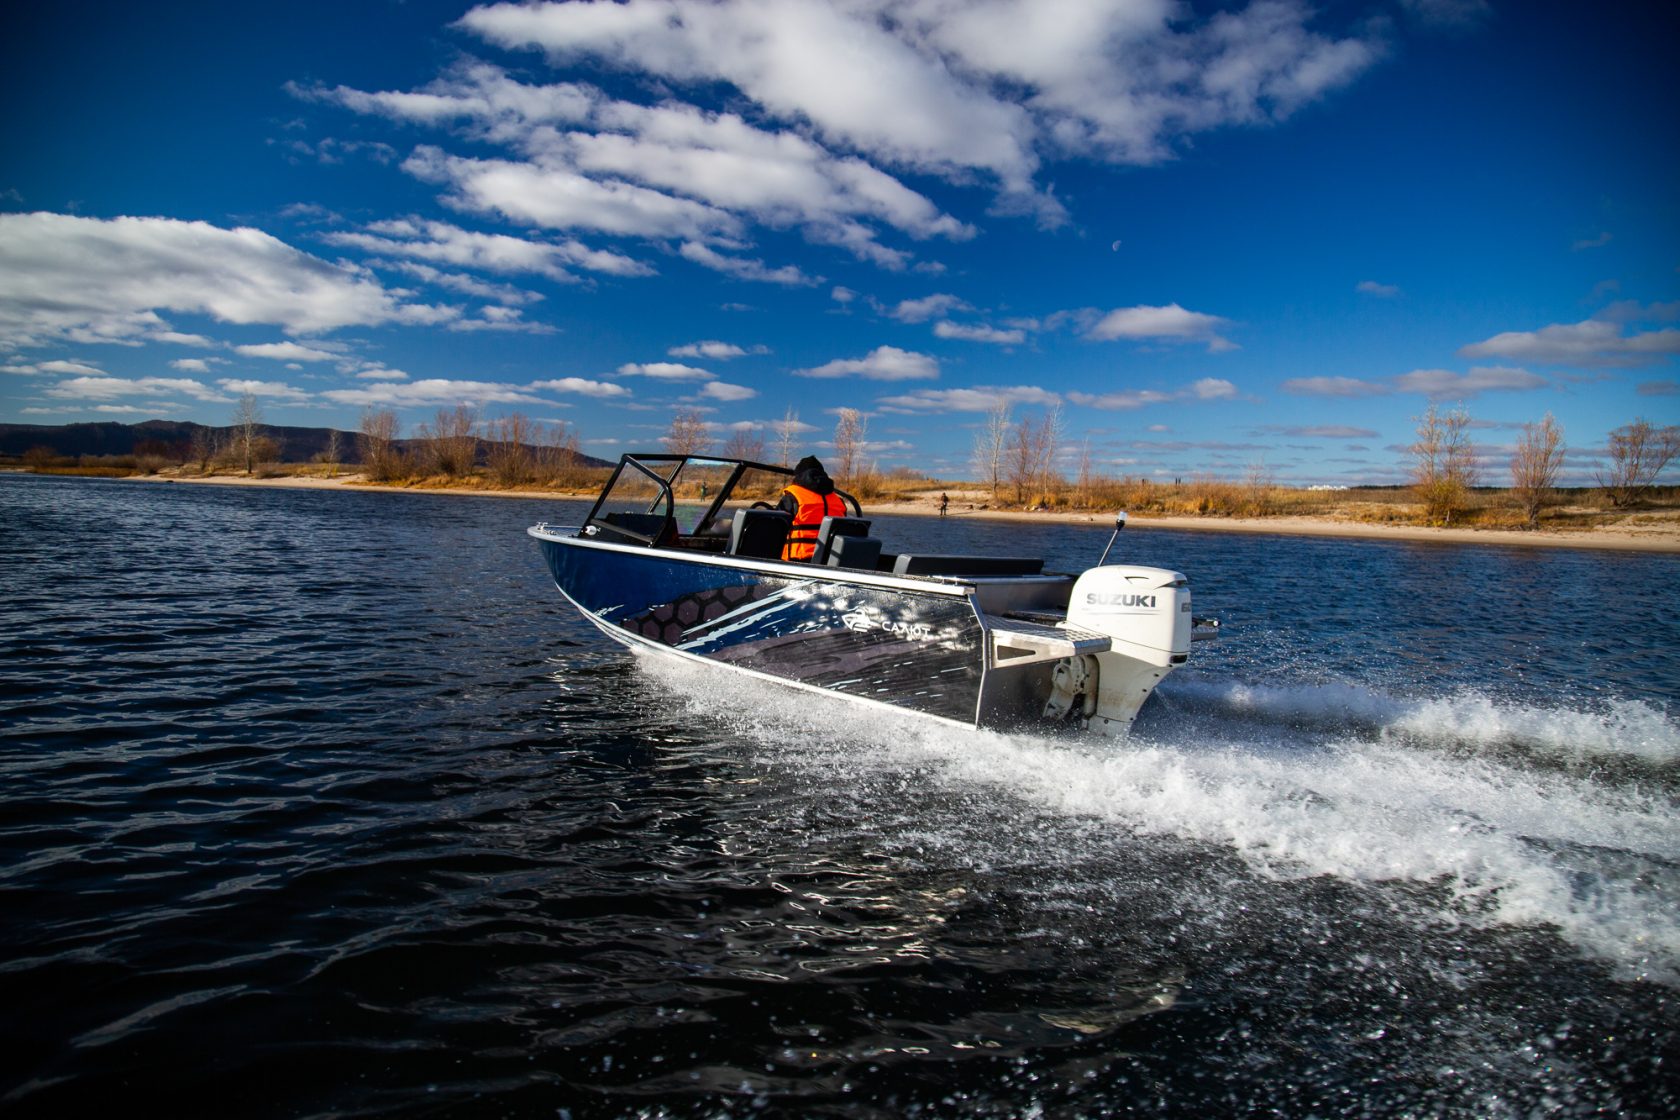 Лодка алюминиевая Салют Pro 480 Neo BowRider LargeBow Fish Pro